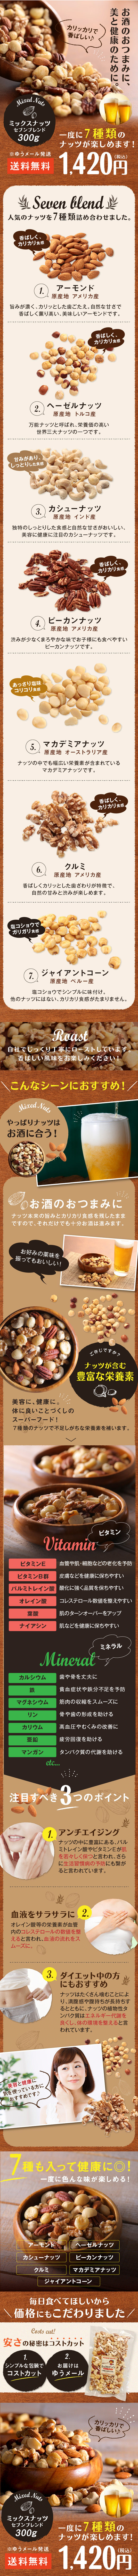 Mixed Nuts セブンブレンド300g